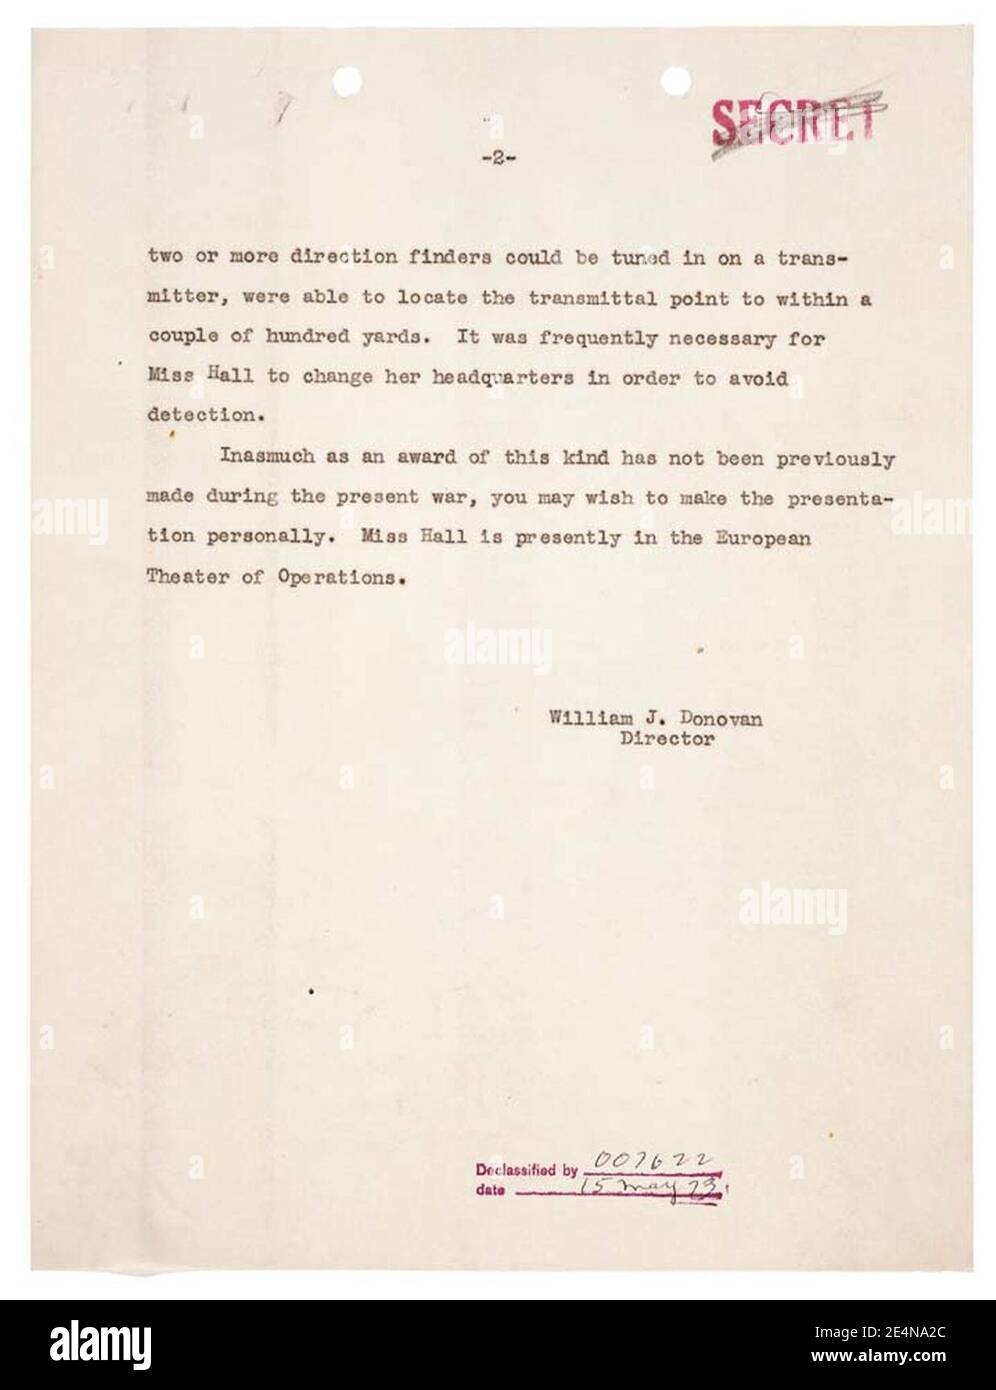 Memorandum for the President from William J. Donovan Regarding Distinguished Service Cross (DSC) Award to Virginia Hall, 05-12-1945, Page 2 of 2 (5669348109). Stock Photo